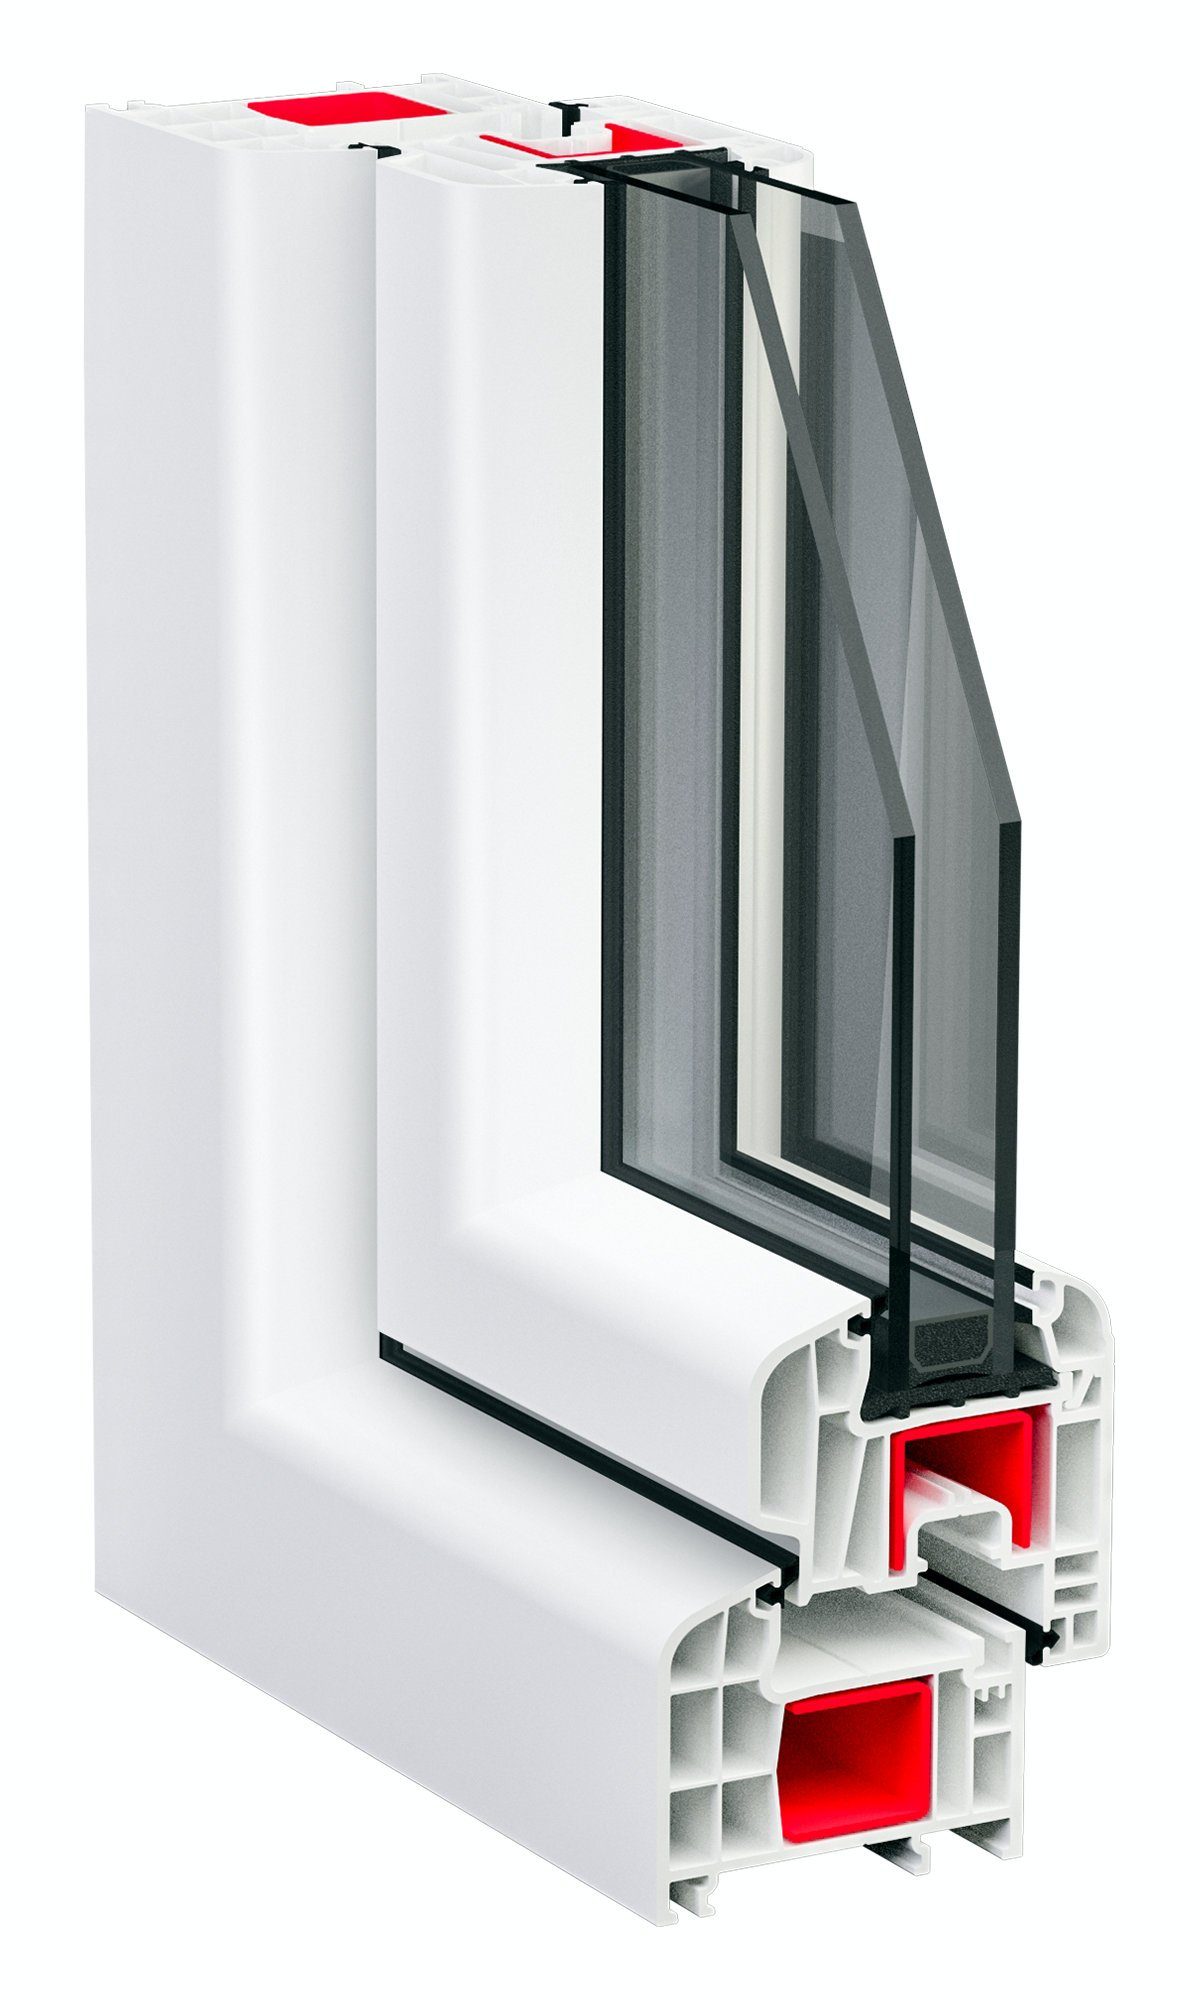 SN DECO GROUP Kellerfenster 1 Dreh-Kipp mm Hochwertiges RC2 weiß Verglasung 5-Kammer-Profil Profil, 70 Sicherheitsbeschlag, Flügel 1000x1000 (Set), 2-fach